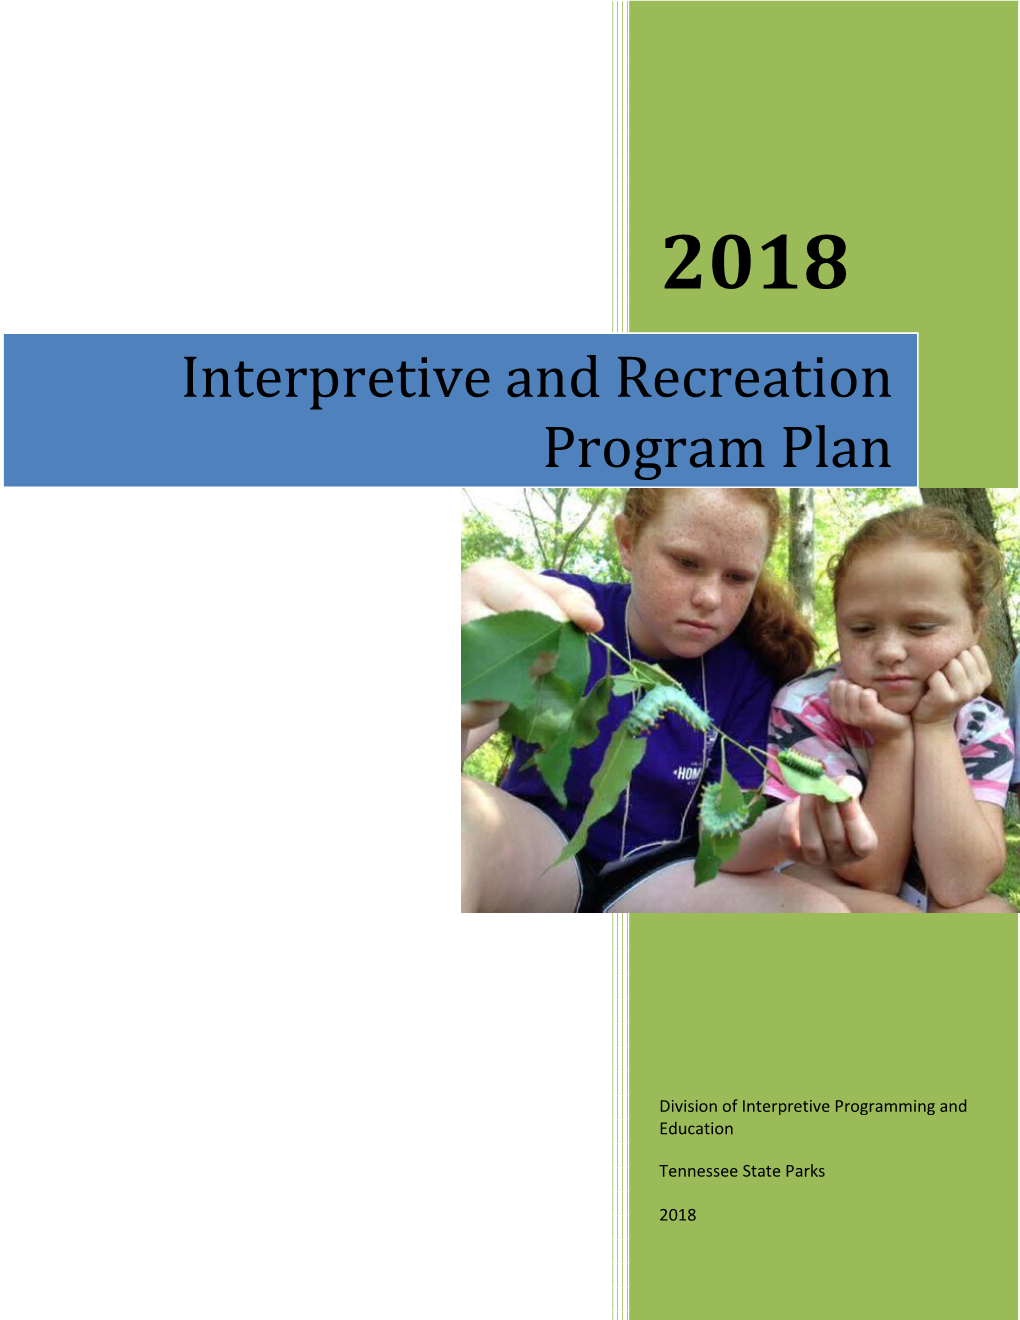 2018 Interpretive and Recreation Program Plan